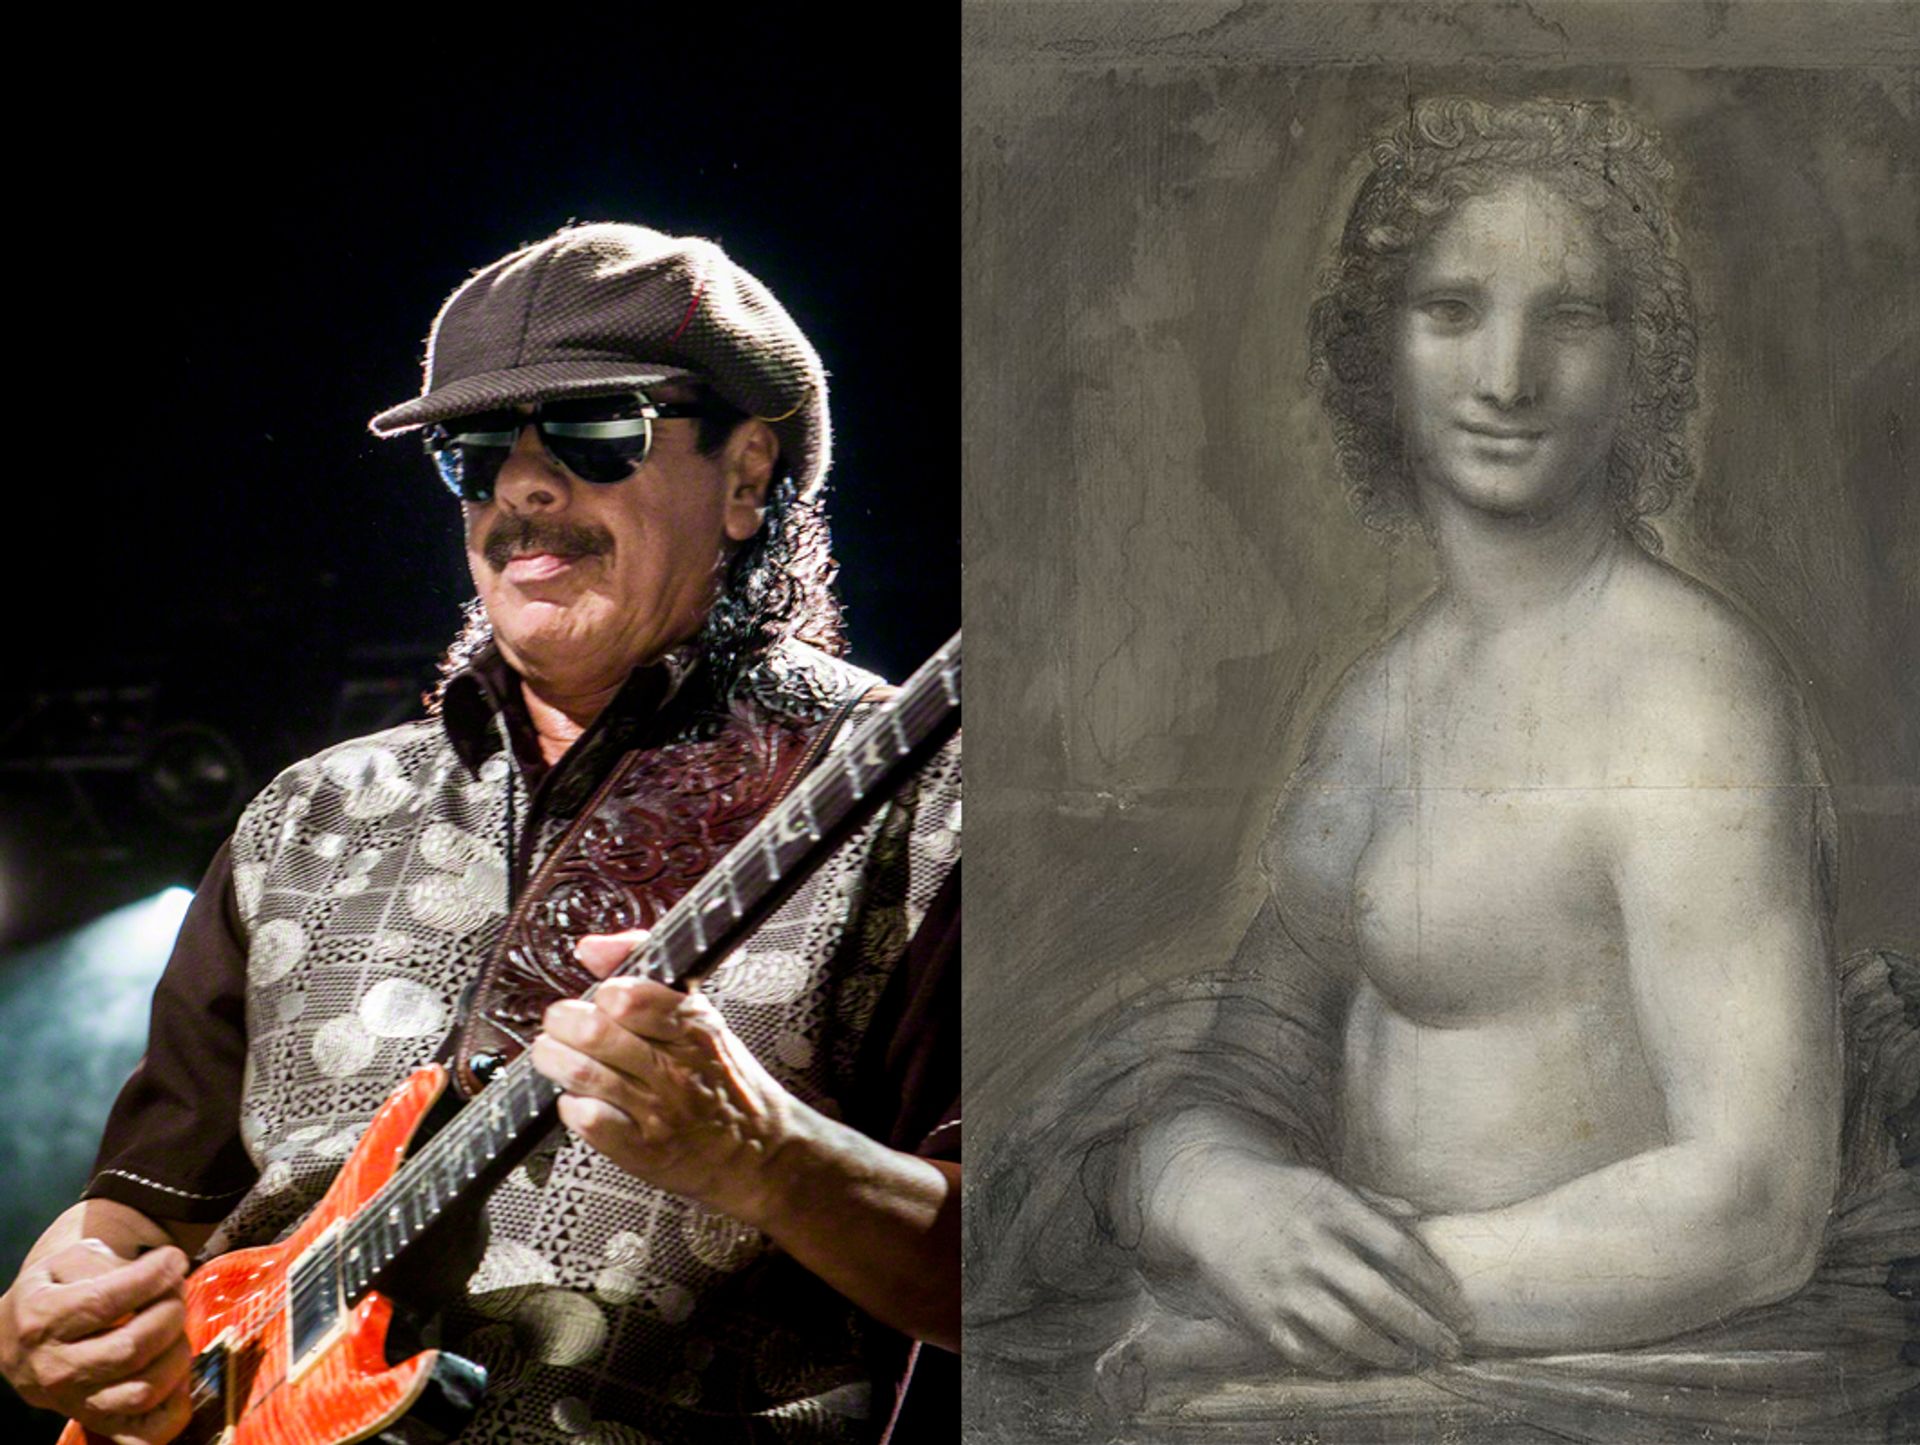 Naked attraction: Carlos Santana has sung about wanting to see the Mona Lisa naked 